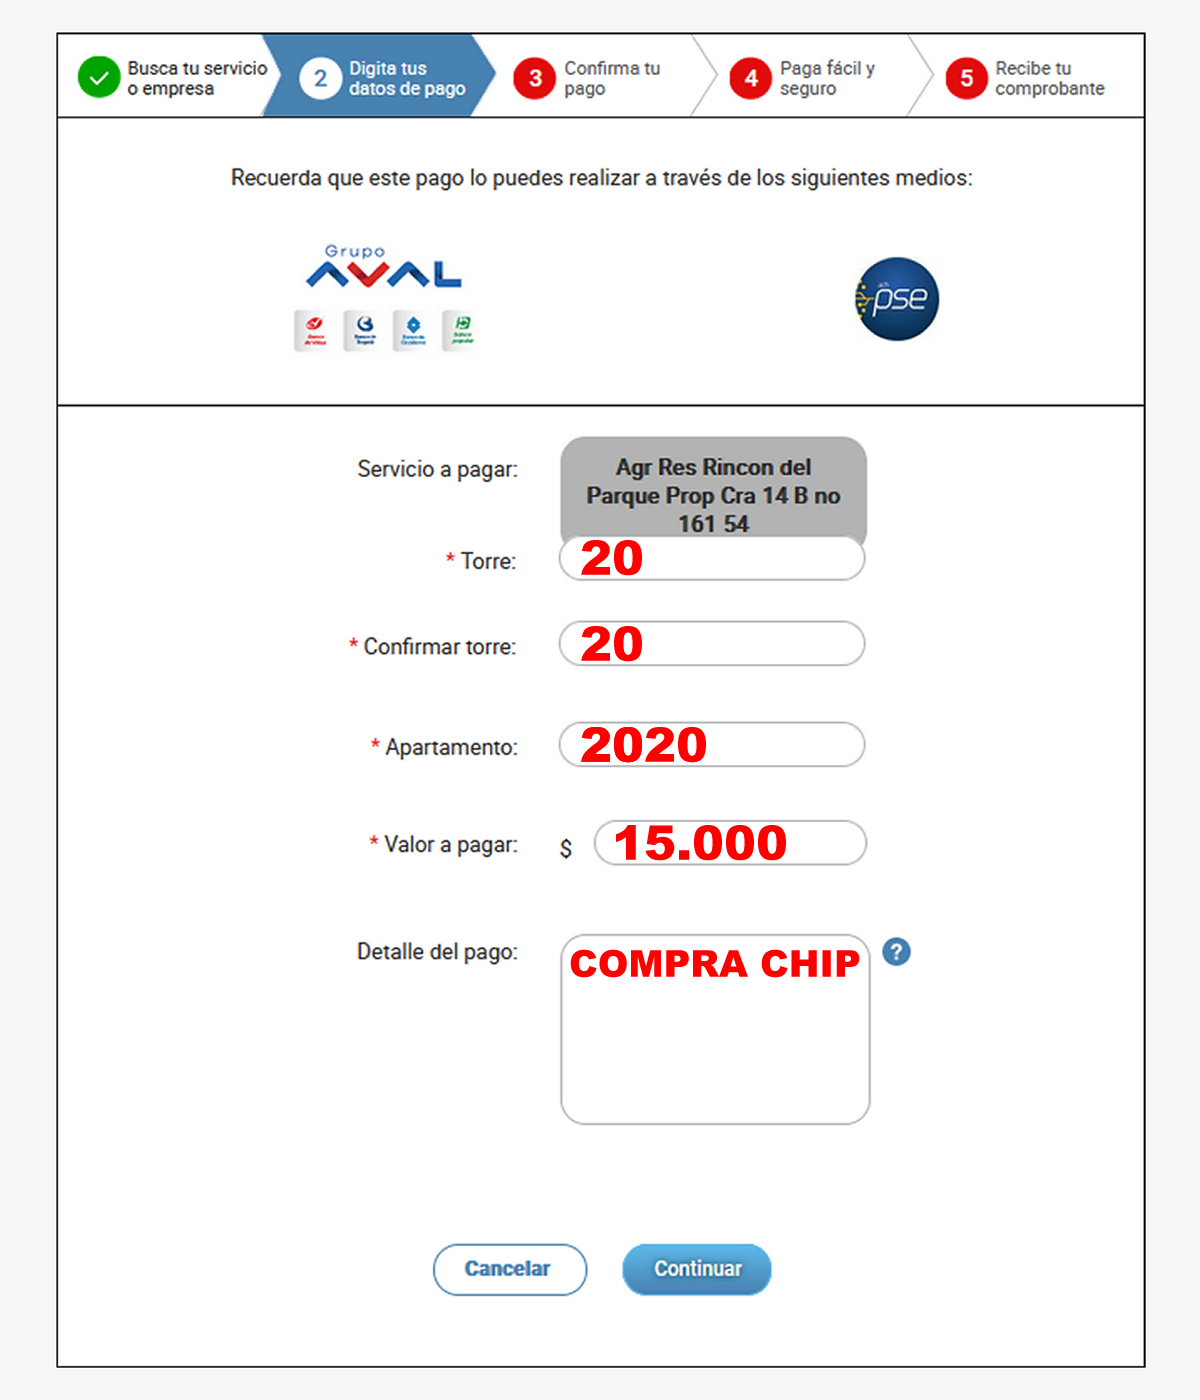 15-06-2022 Comunicado: Banco AV Villas: Pago Chips de Acceso